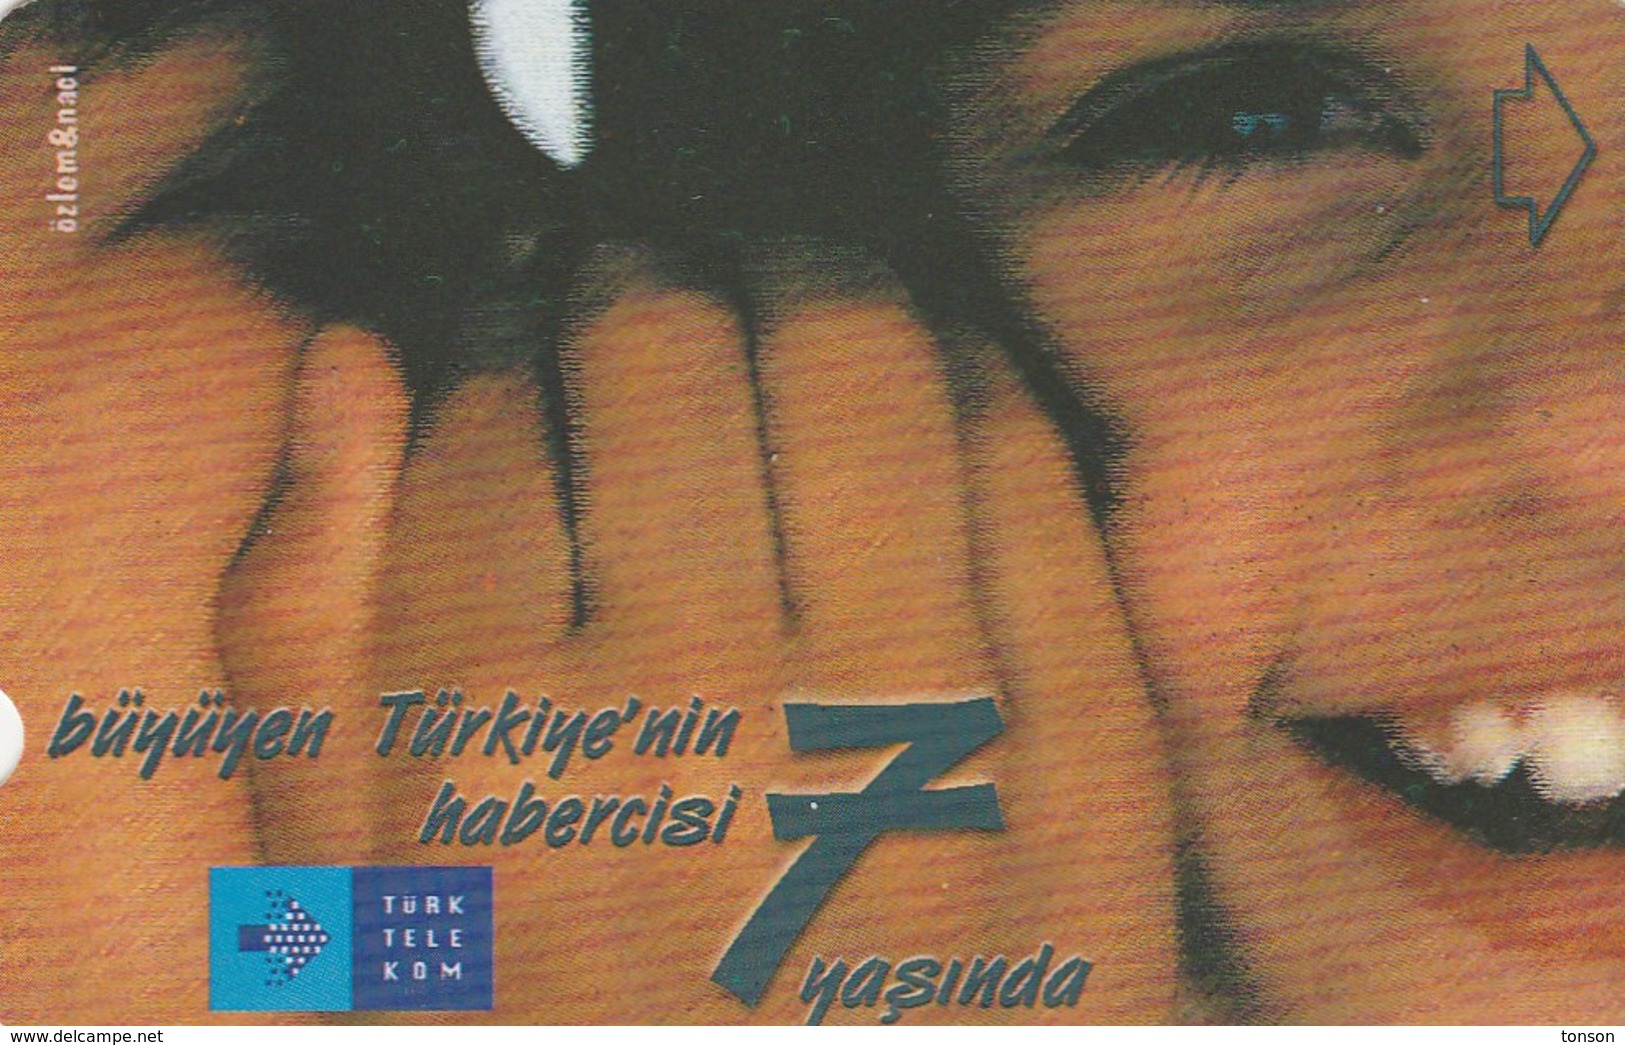 Turkey, TR-TT-N-232, 7th Annv. Of TT - Horizontal, 2 Scans. - Turchia